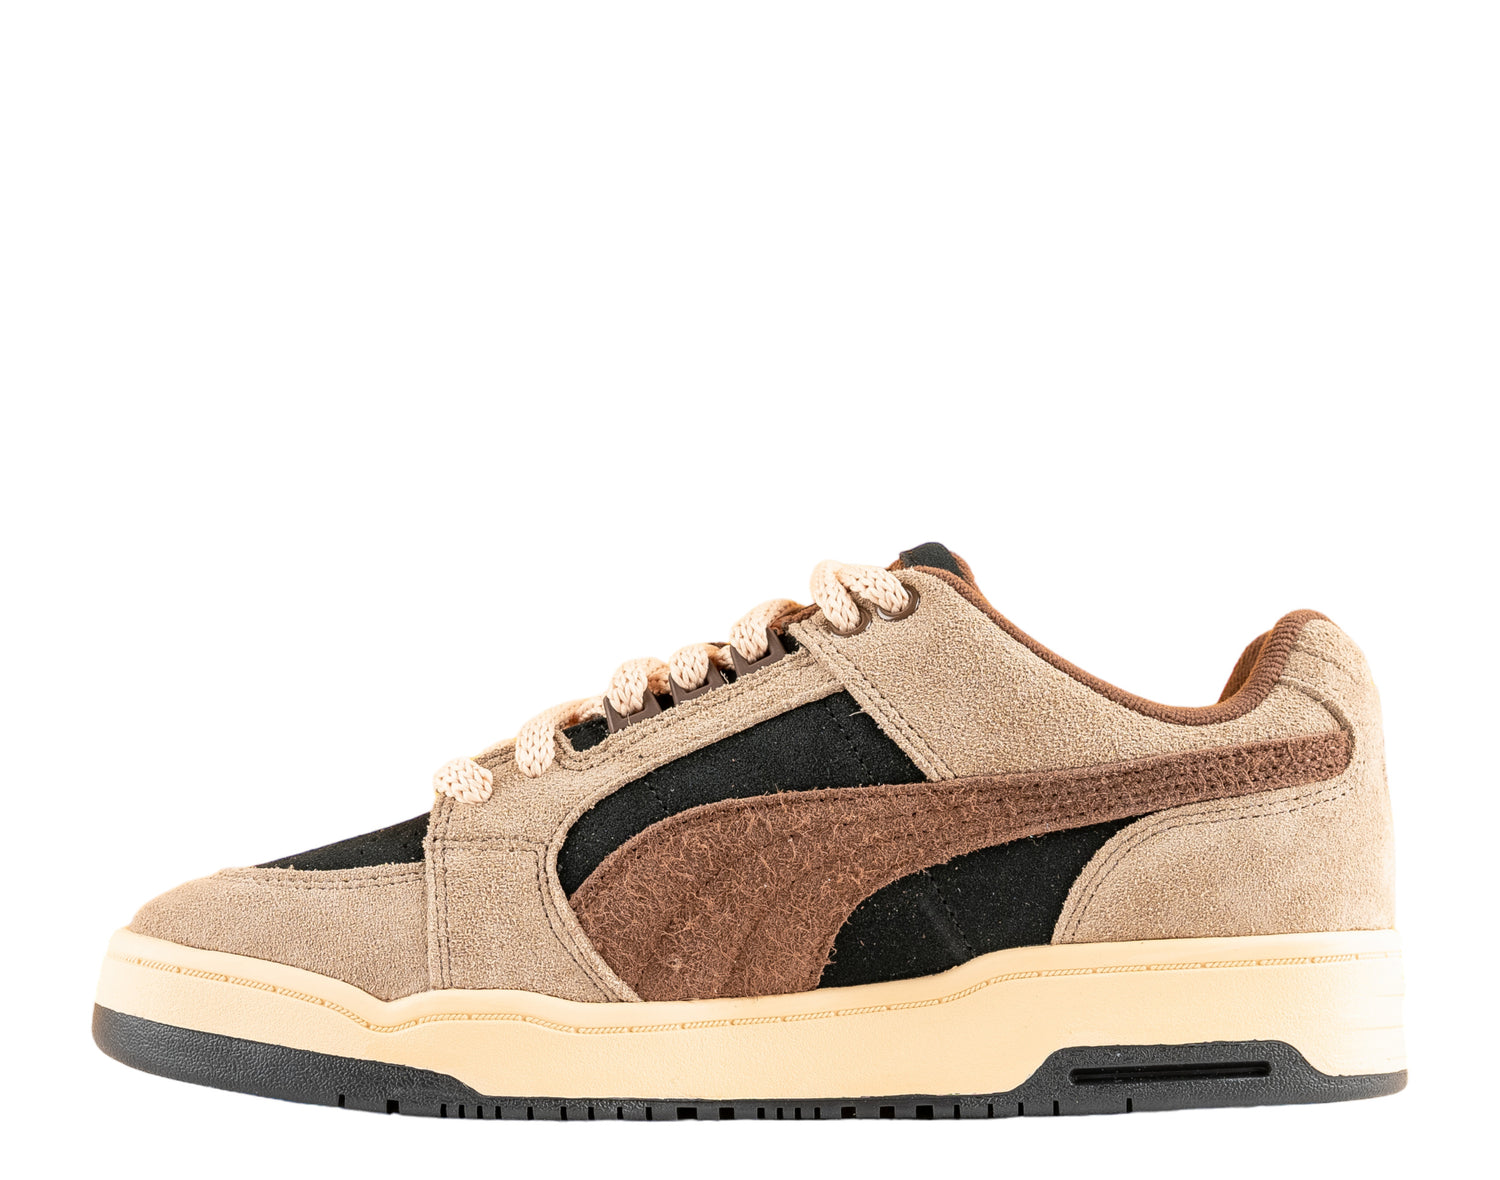 Puma Slipstream Lo Texture Men's Sneakers